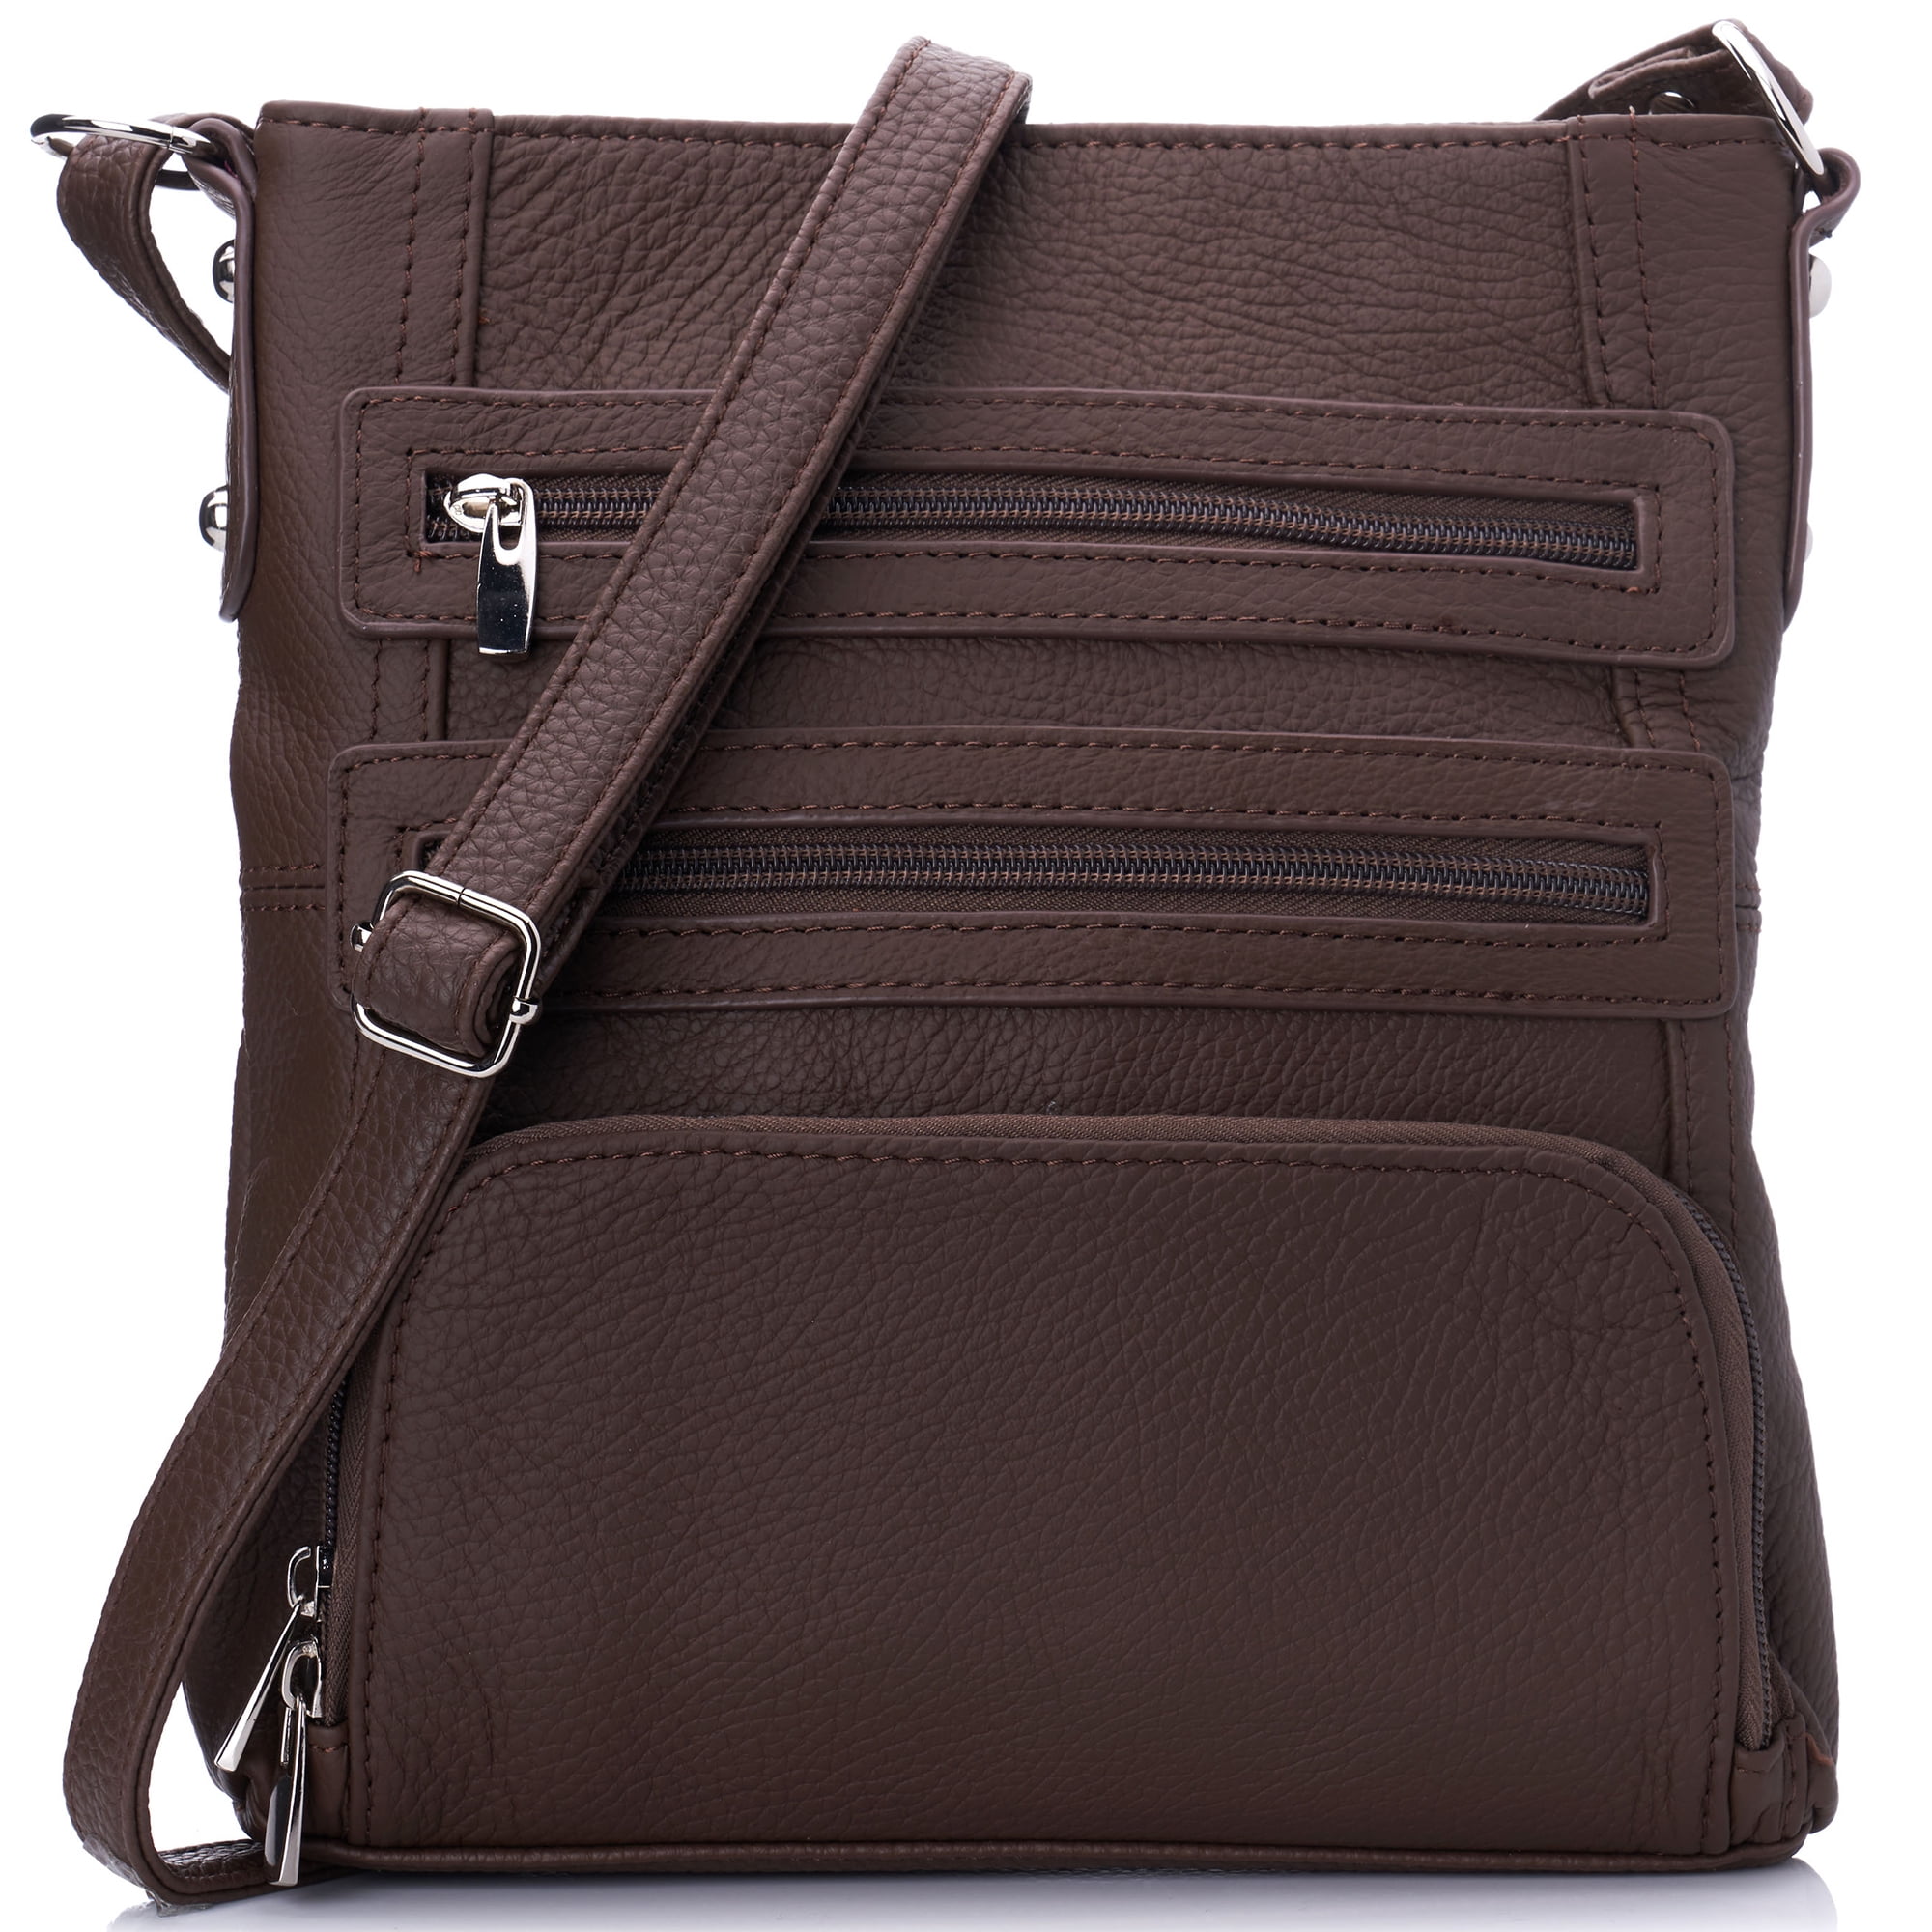 Genuine Leather Messenger Handbags Shoulder Bag Women Brown FREE SHIPPING 